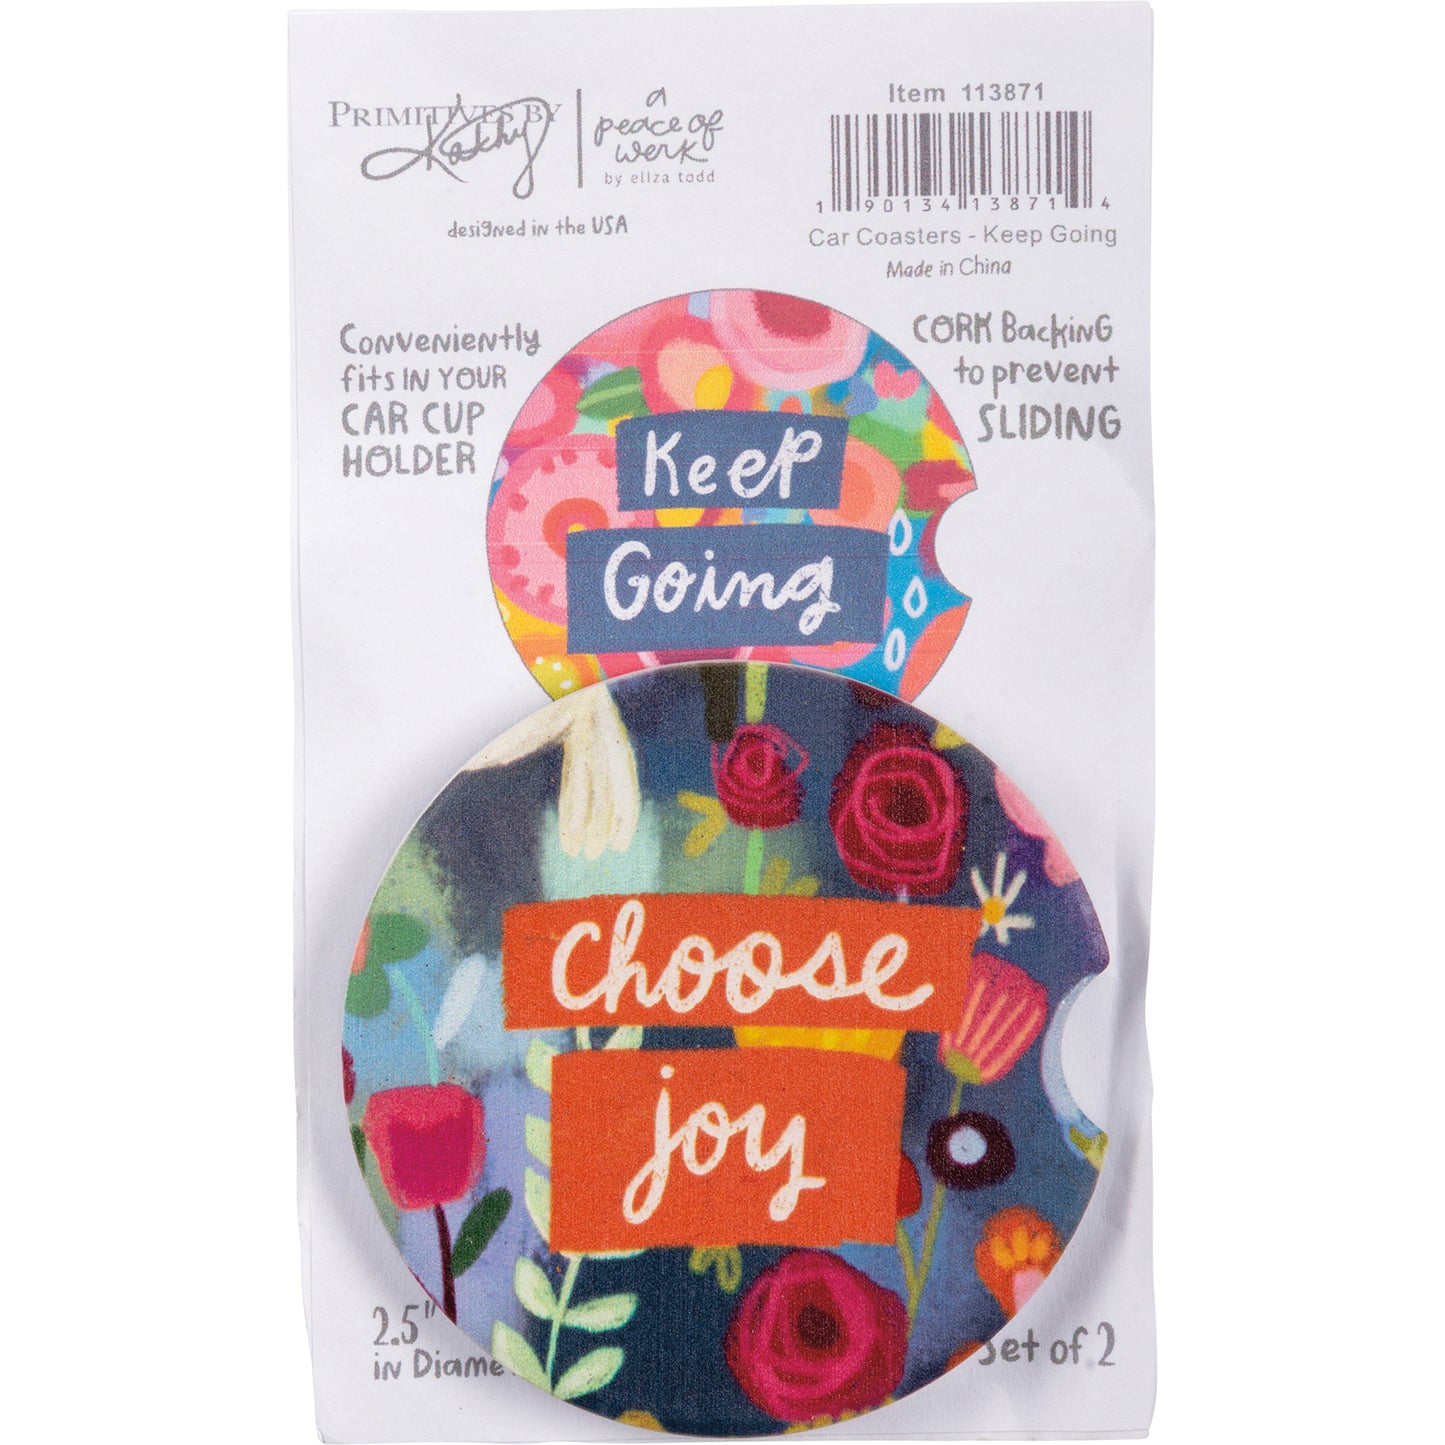 Keep Going + Choose Joy Car Coaster Set